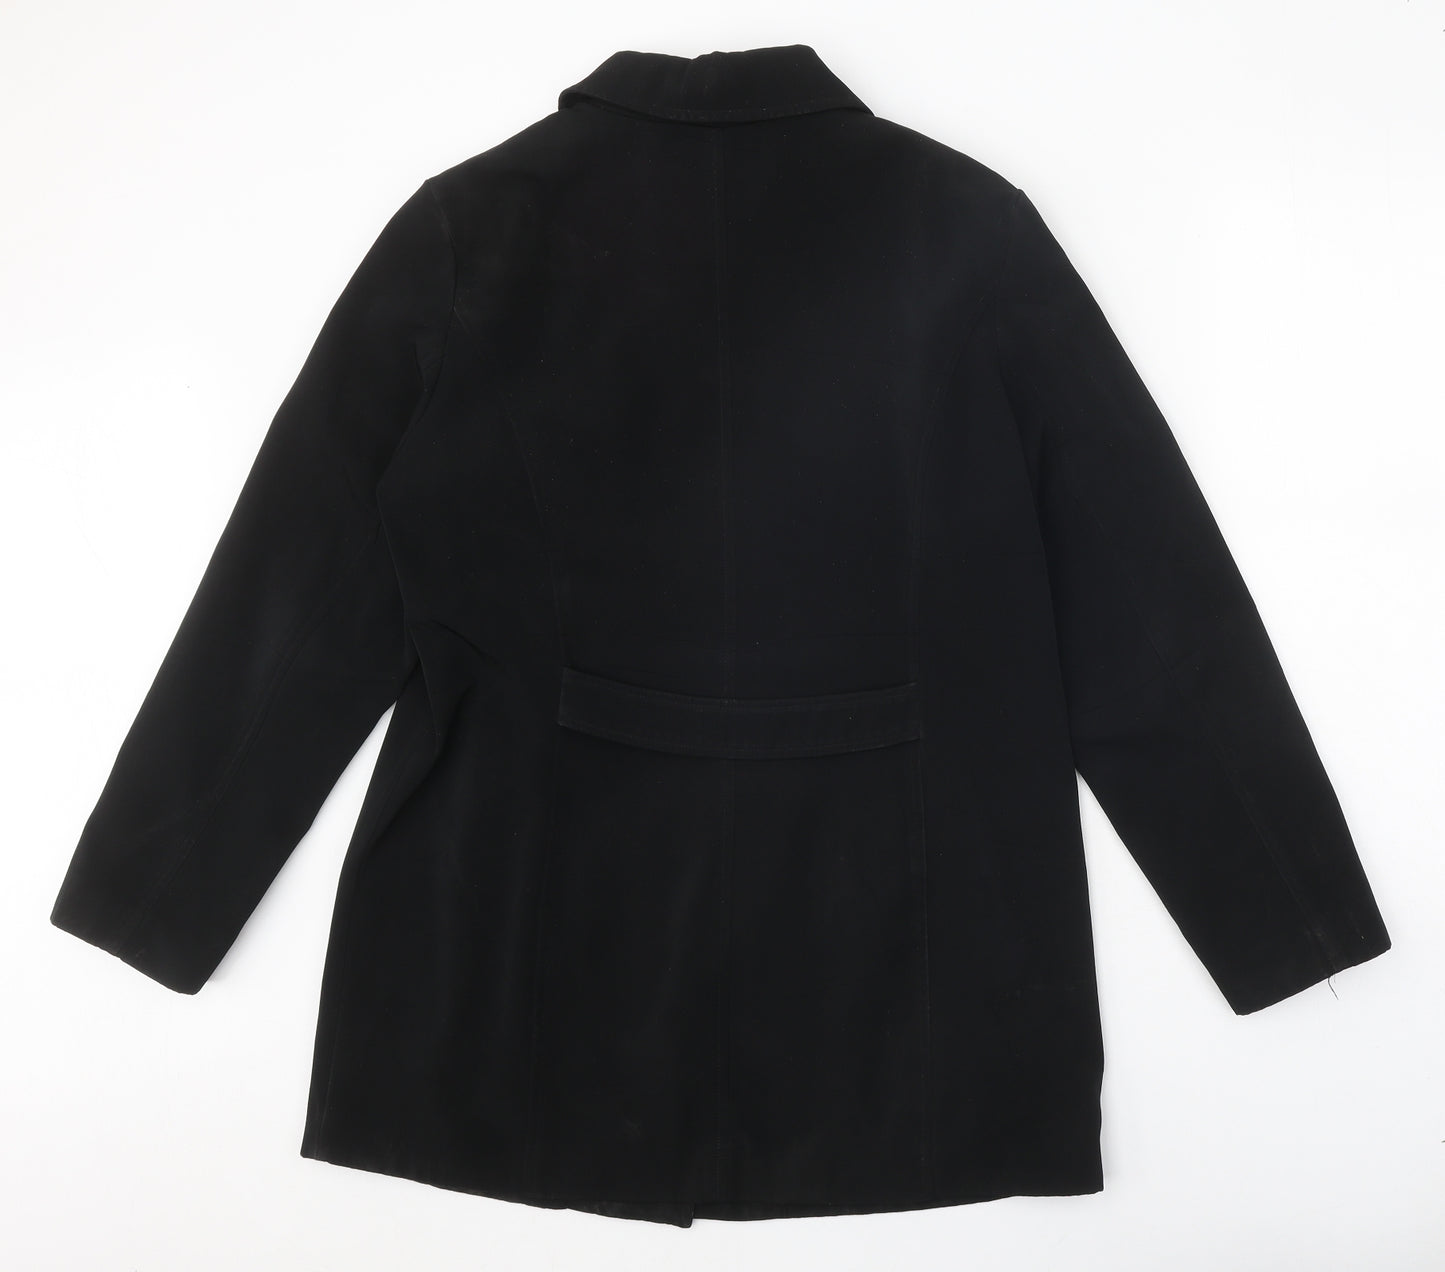 Merona Womens Black Overcoat Jacket Size L Snap